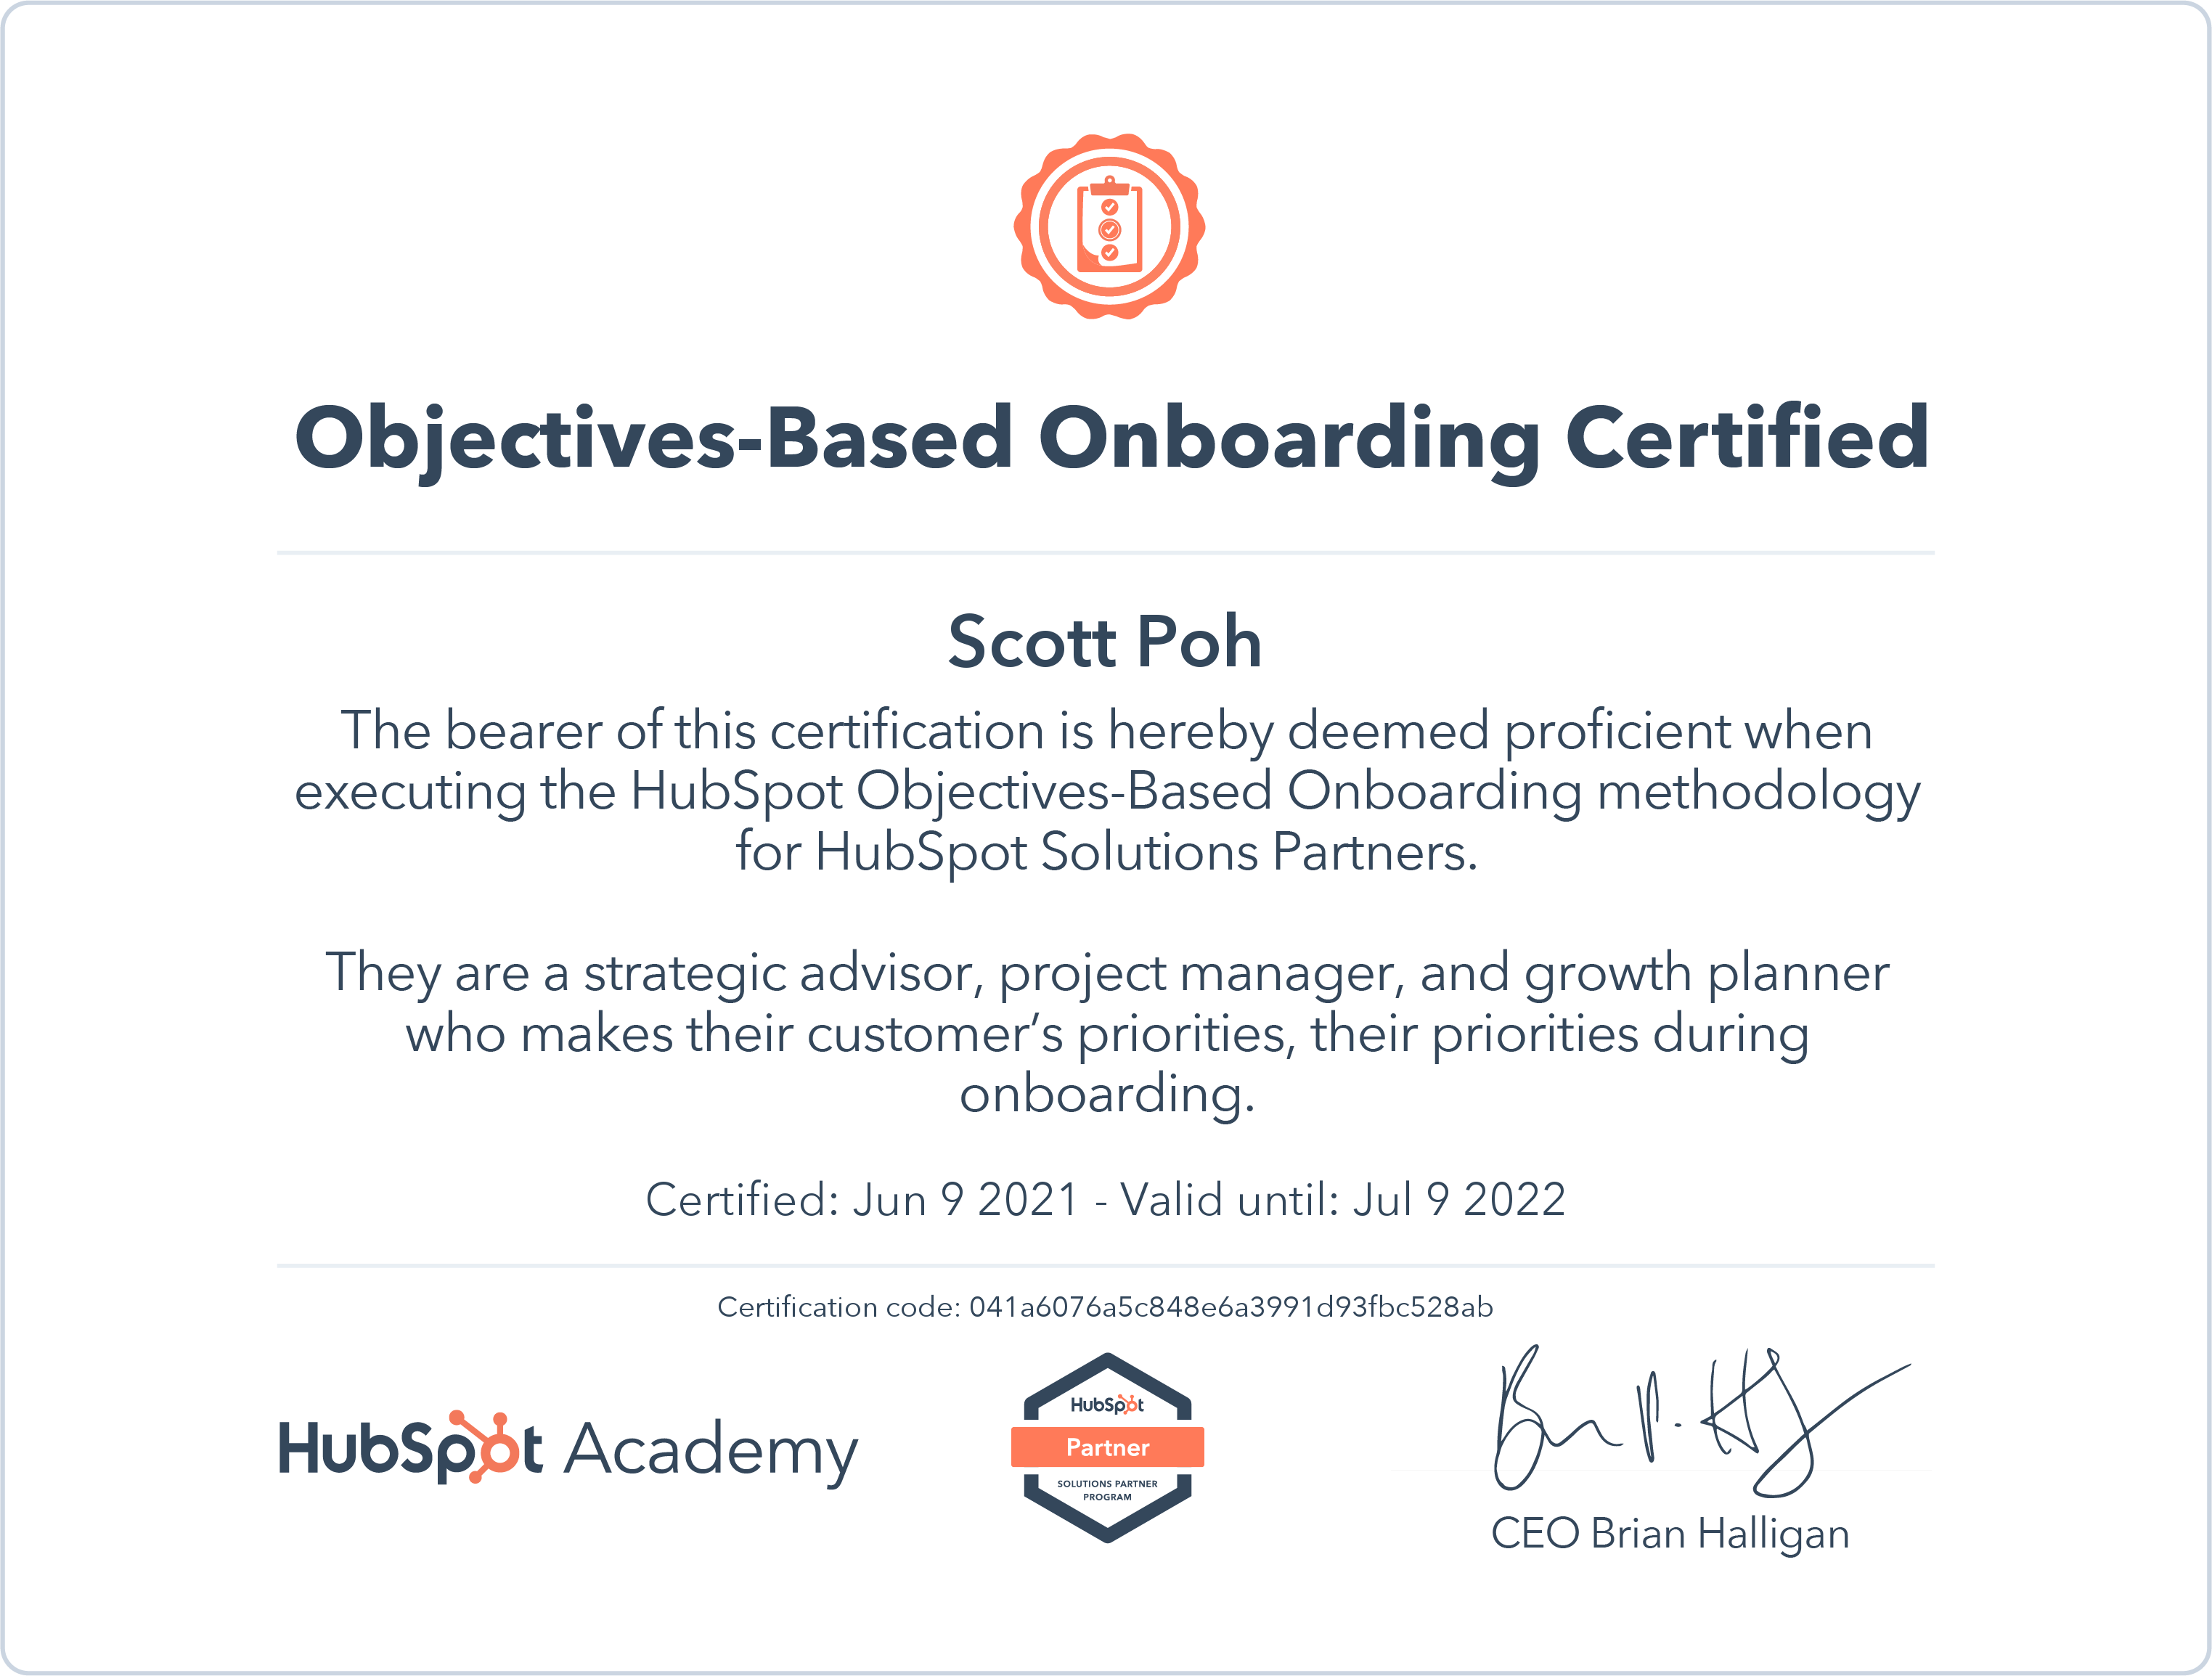 HubSpot Objective-Based Onboarding Certification 2021